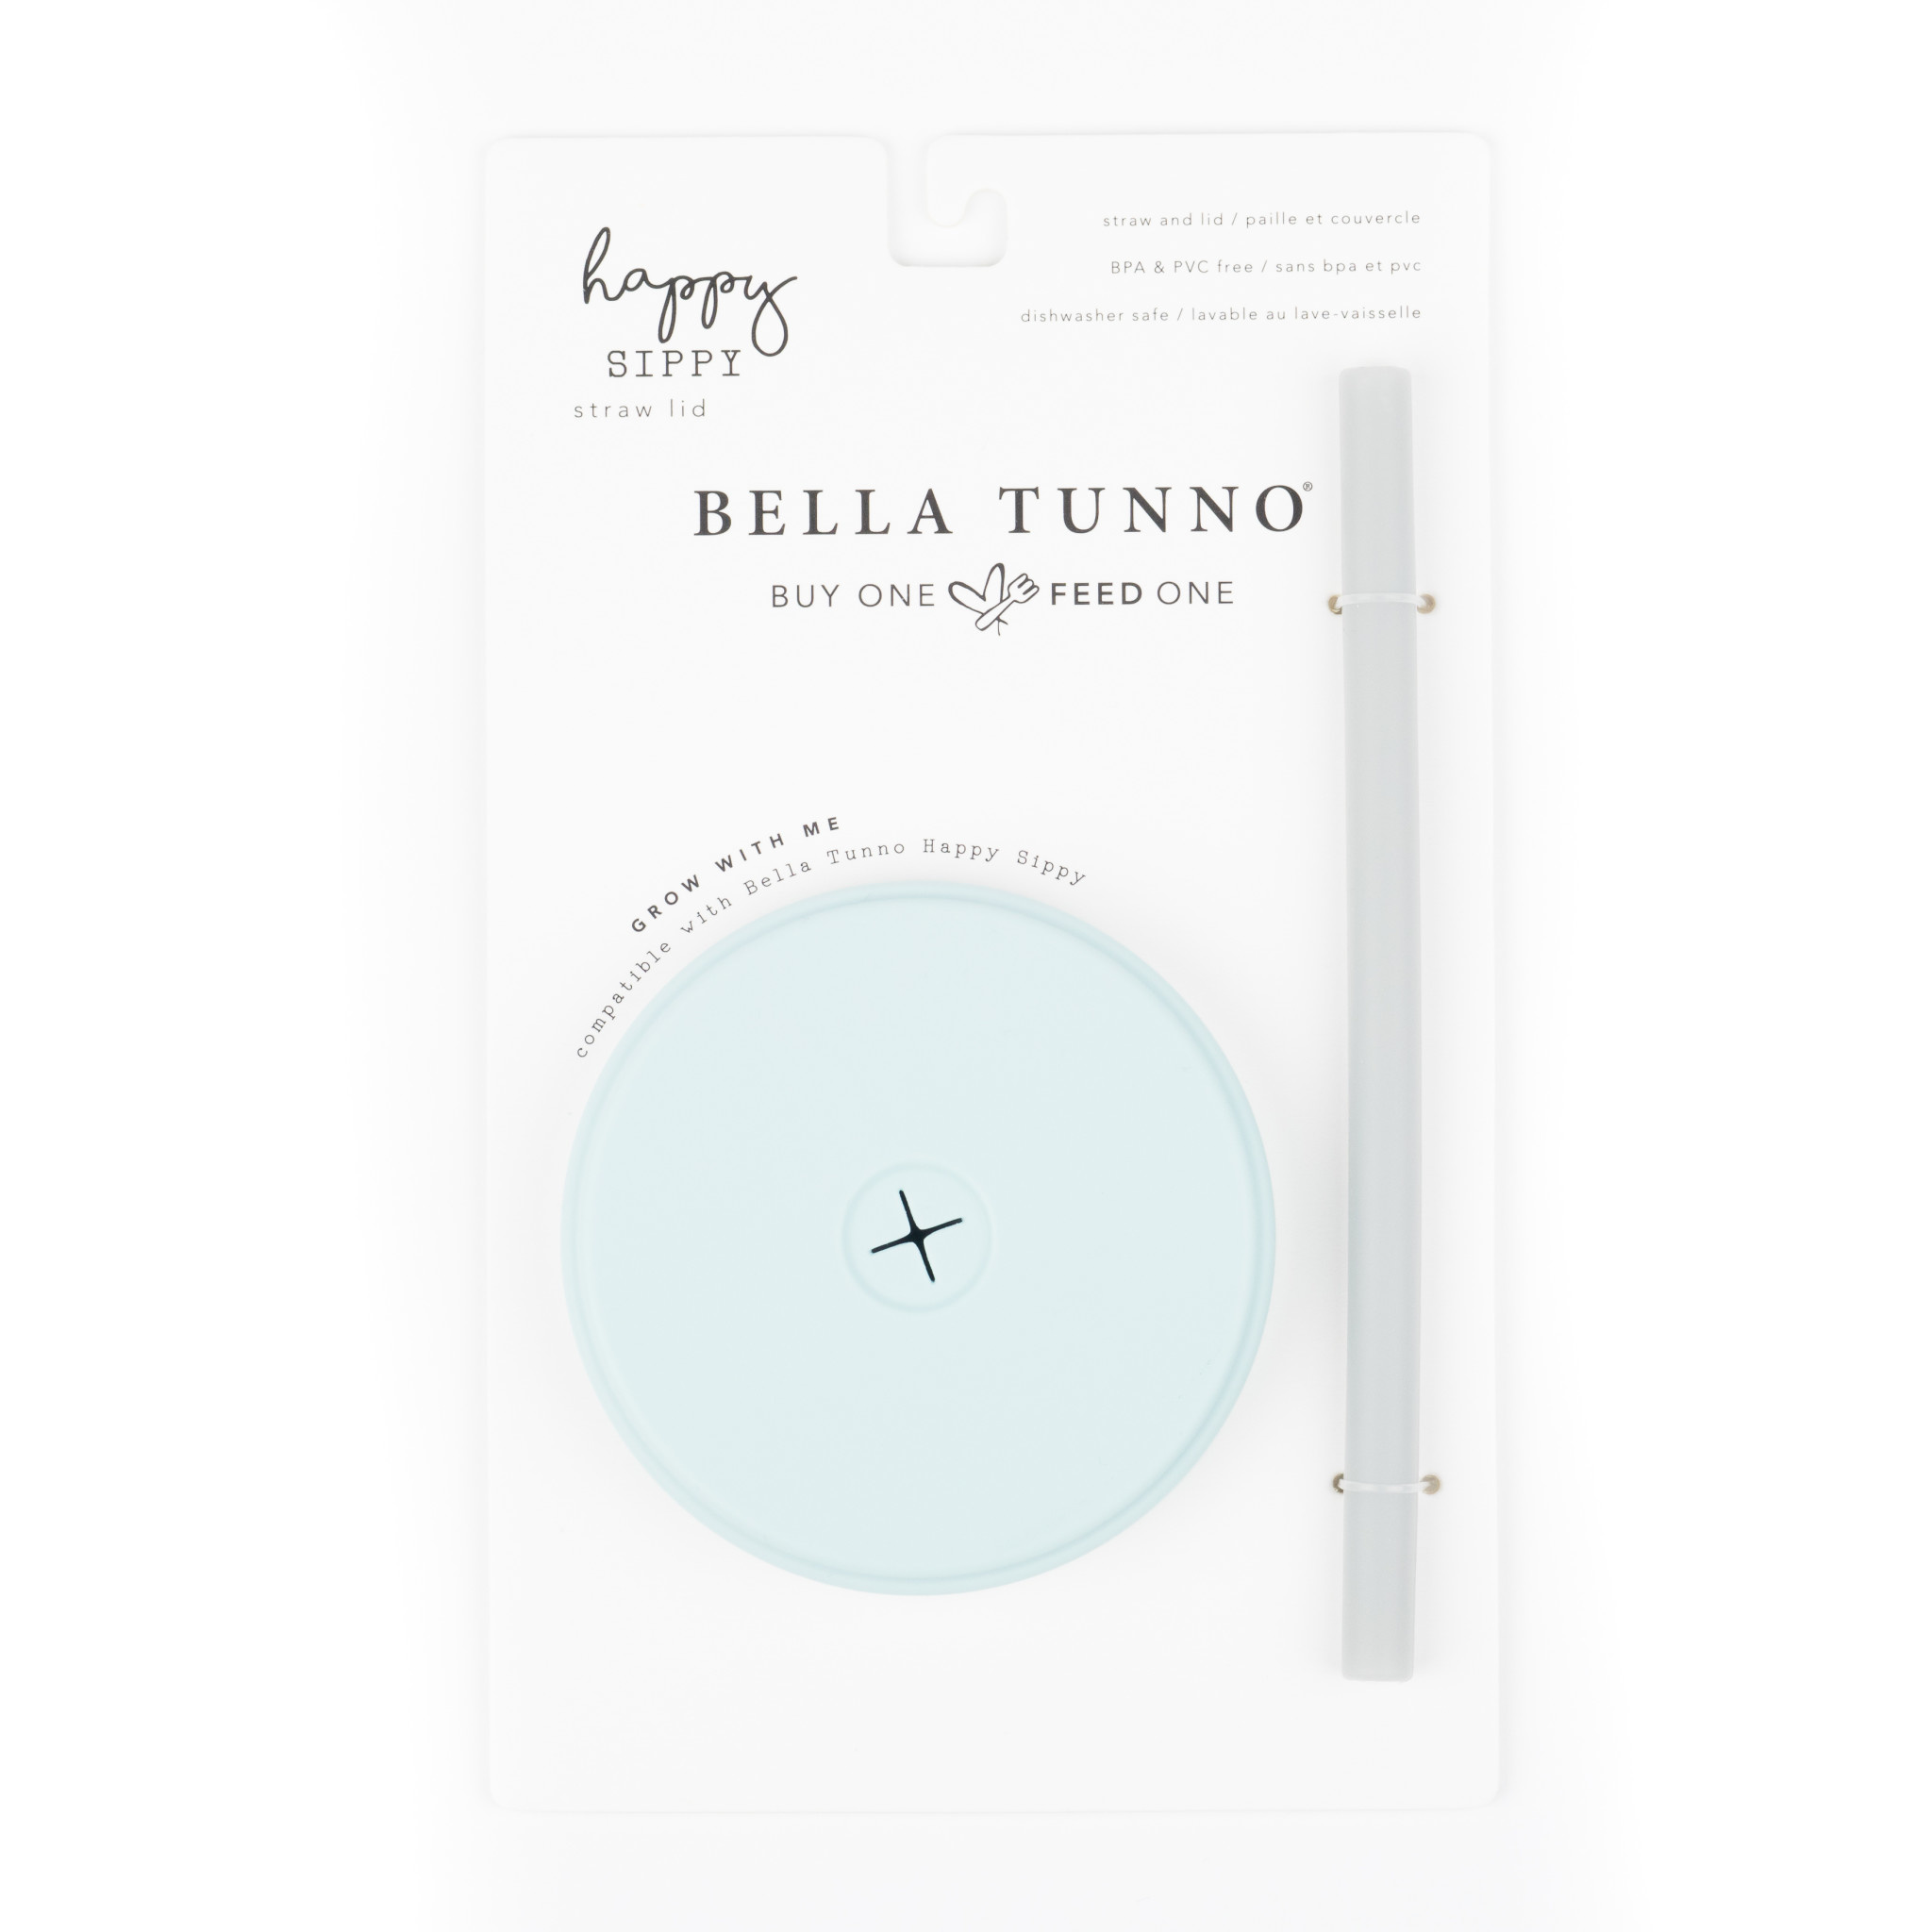 Bella Tunno Sippy Cup Conversion Straw - Fog